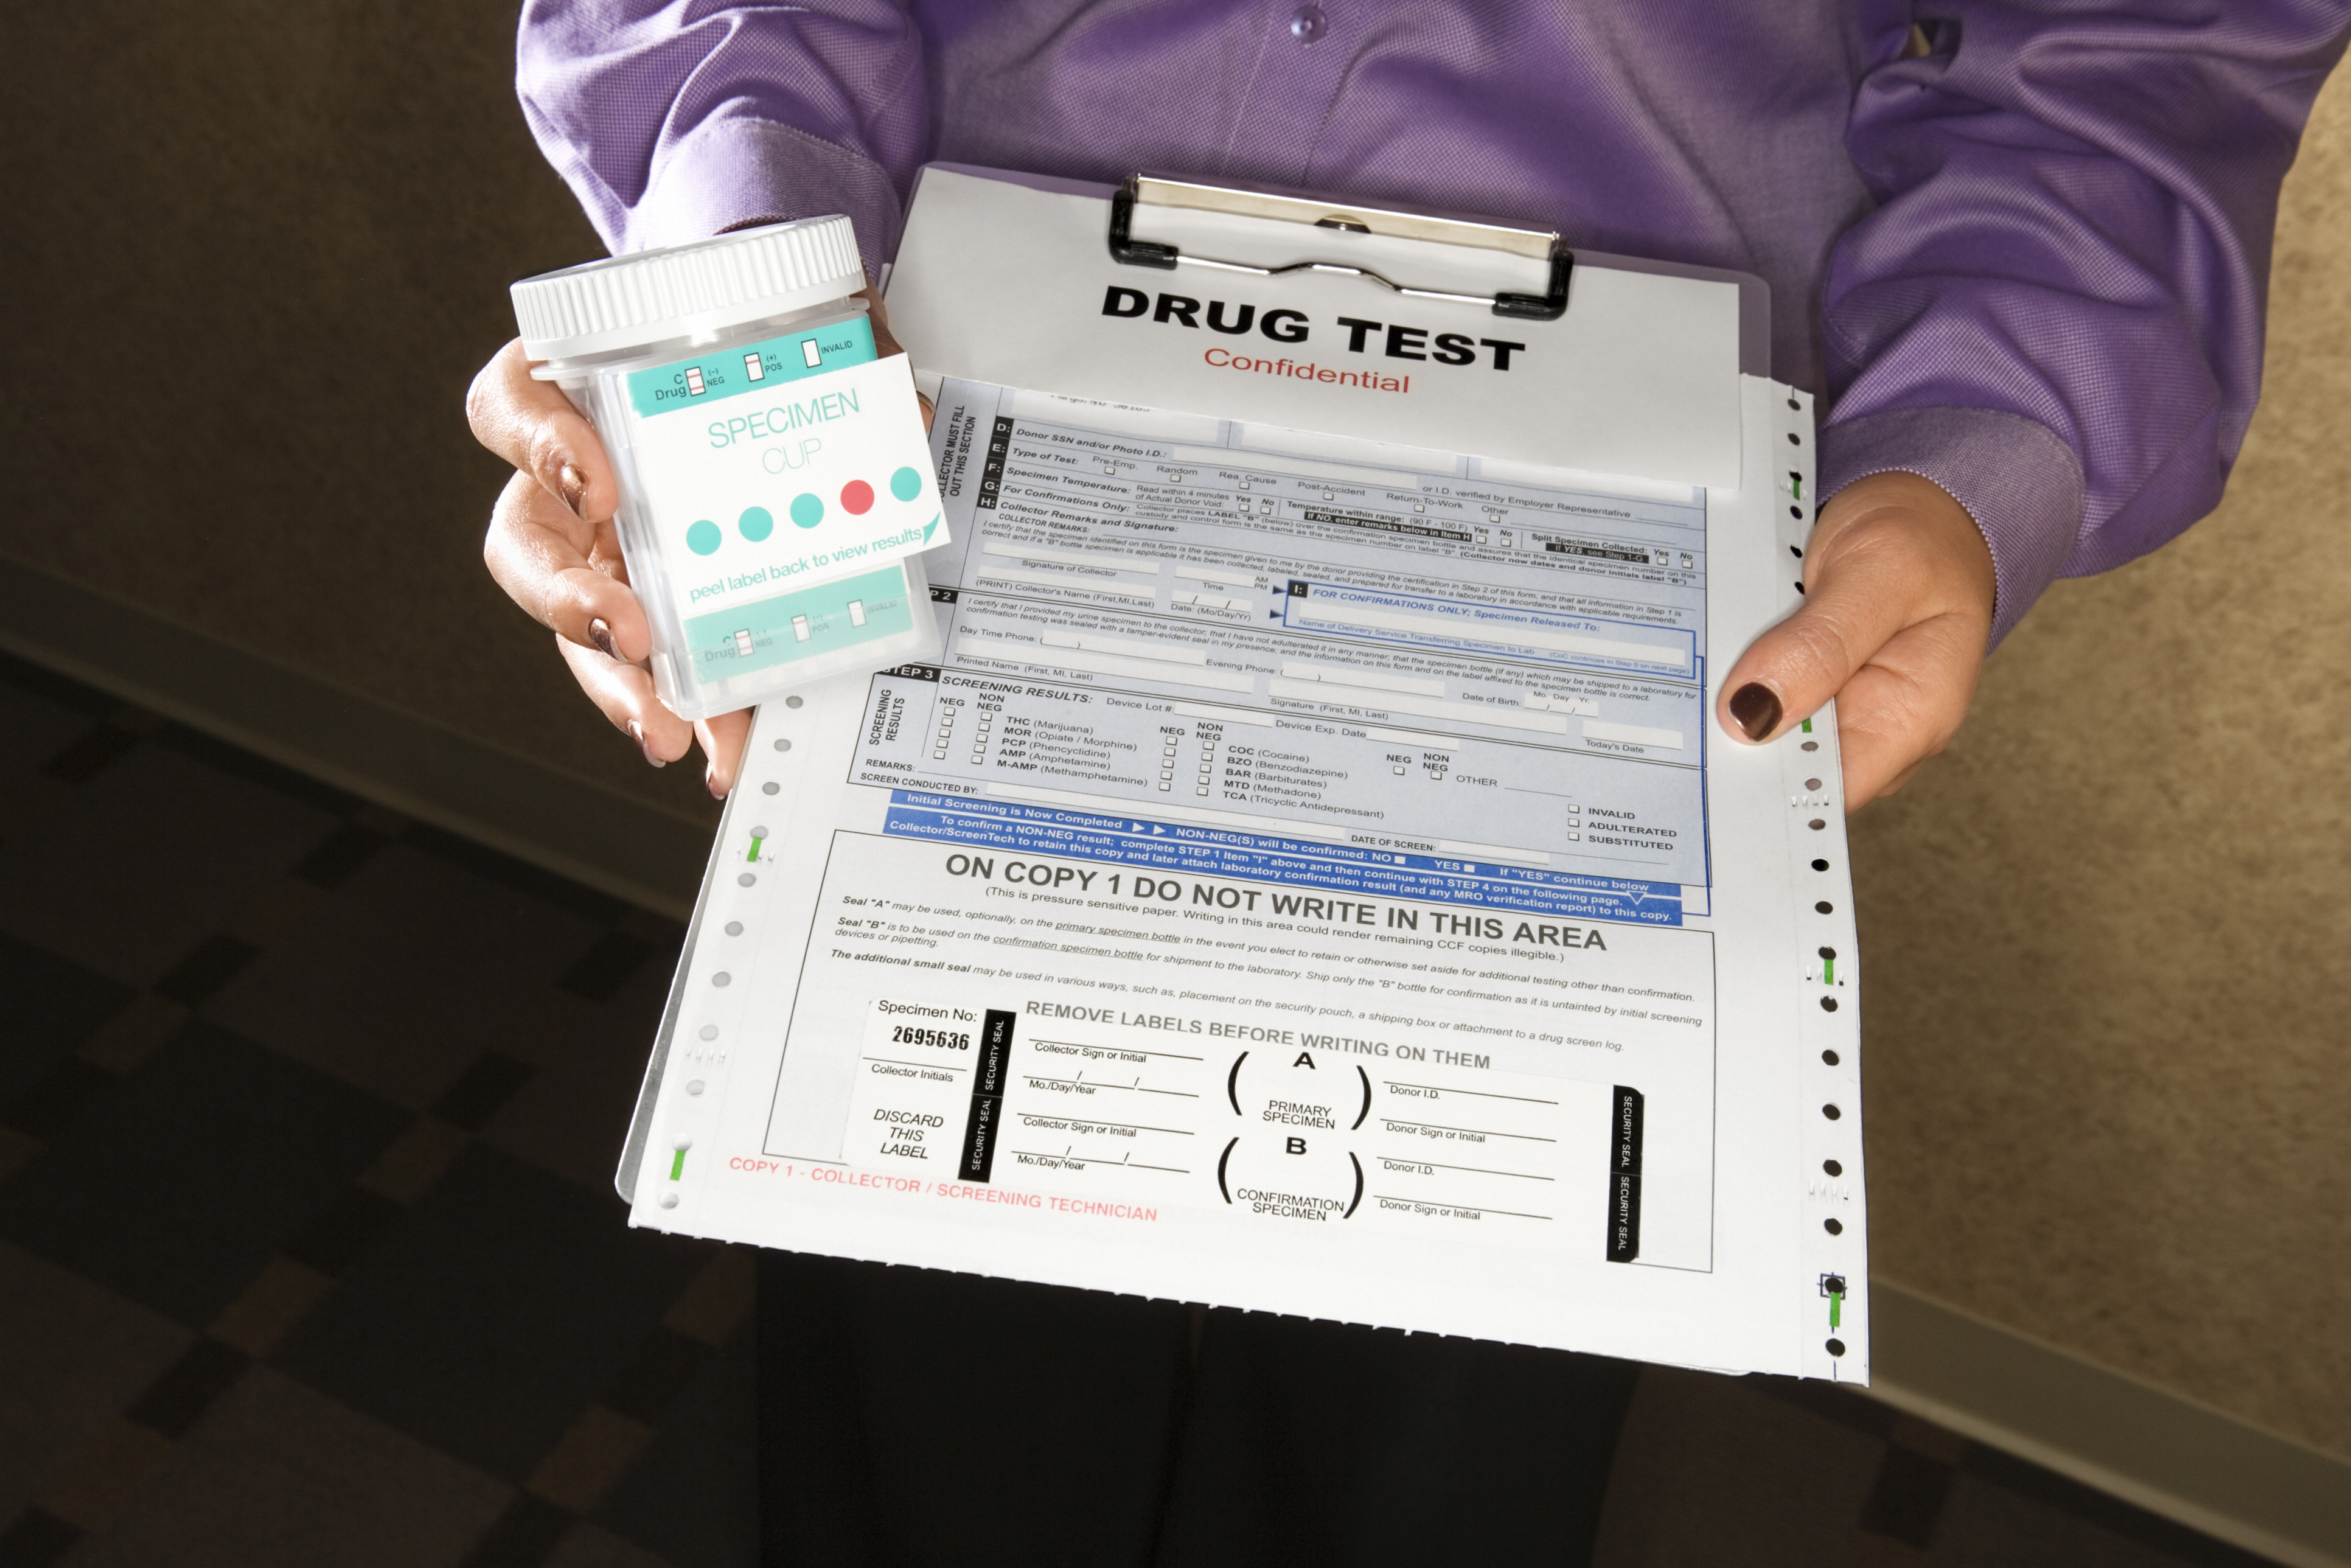 Onsite Drug Testing, 24/7 Hair, Urine, Breath, Fingerprinting